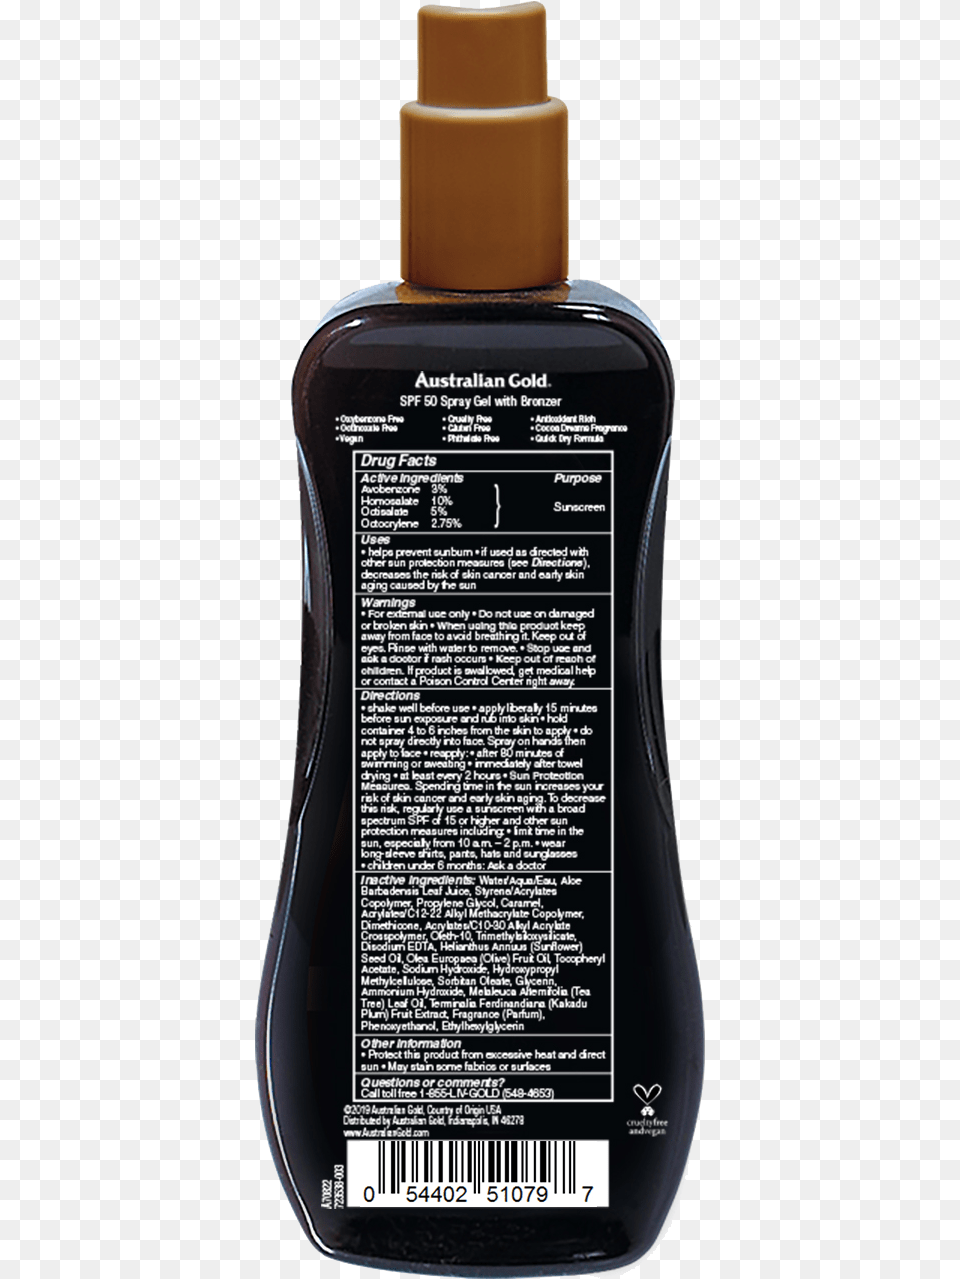 Australian Gold Spf 15 Spray Gel Australian Gold Spray Tanning Labels, Bottle, Cosmetics, Perfume Png